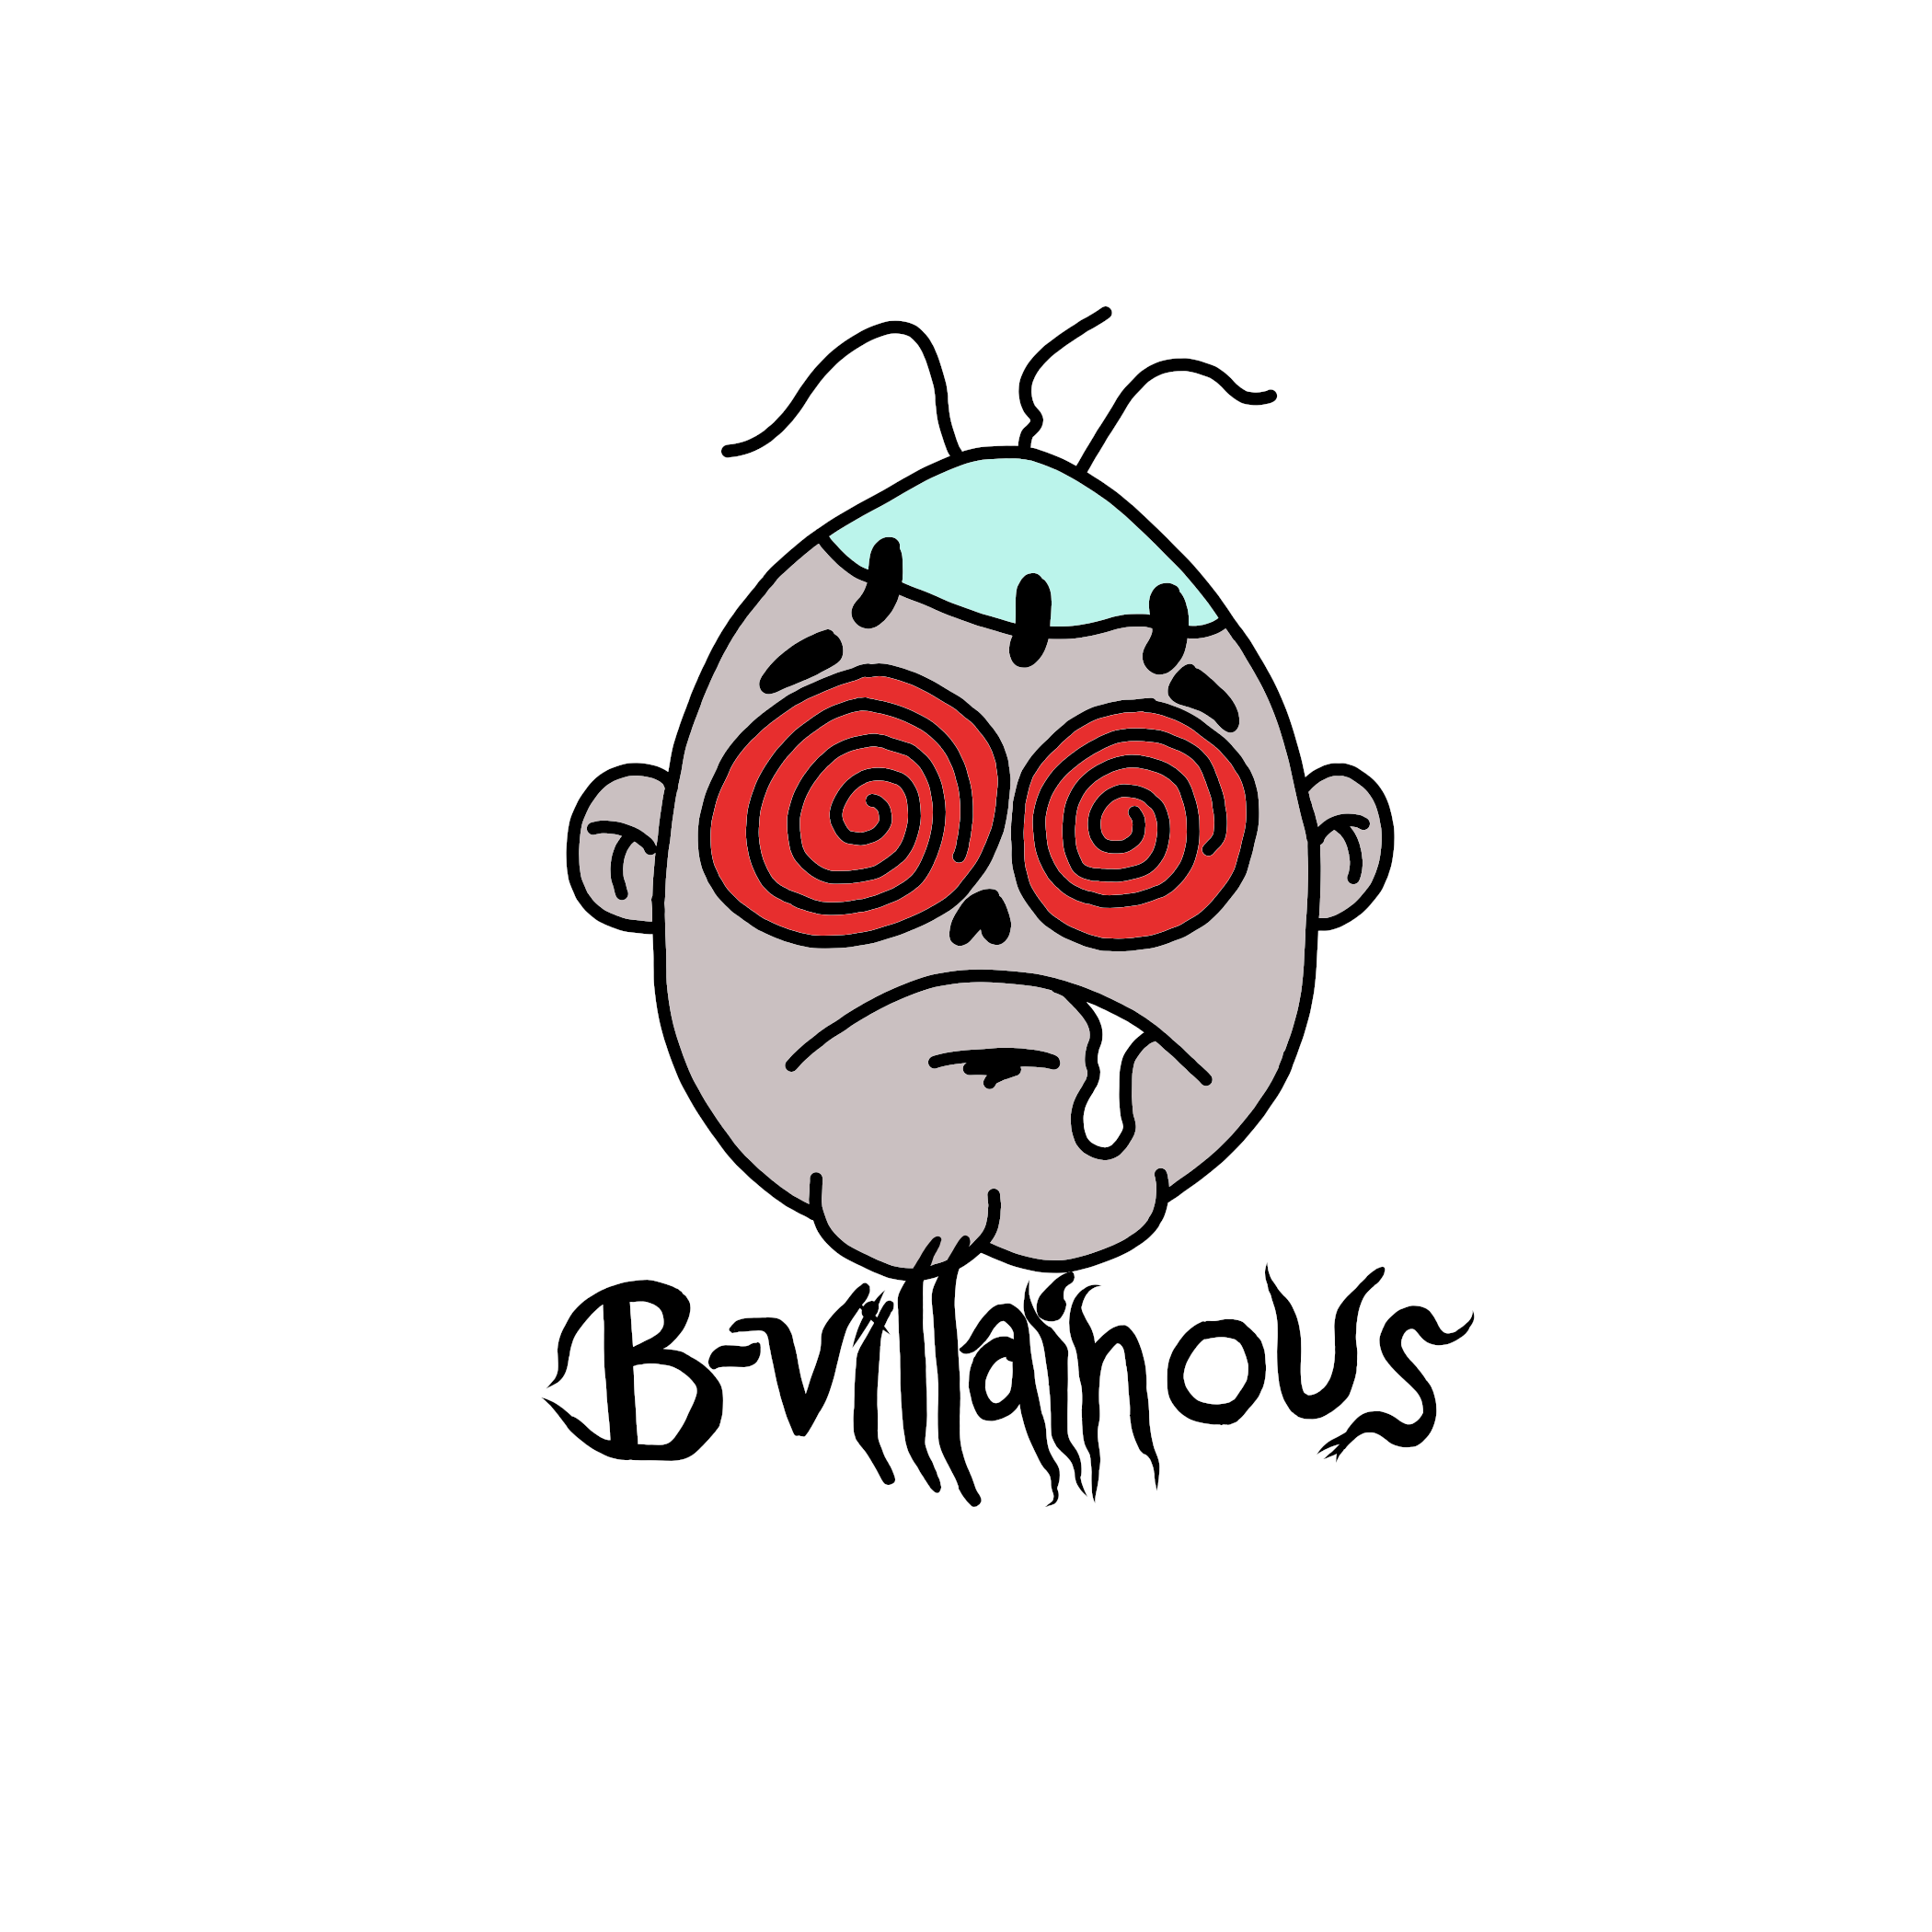 B-Villainous logo